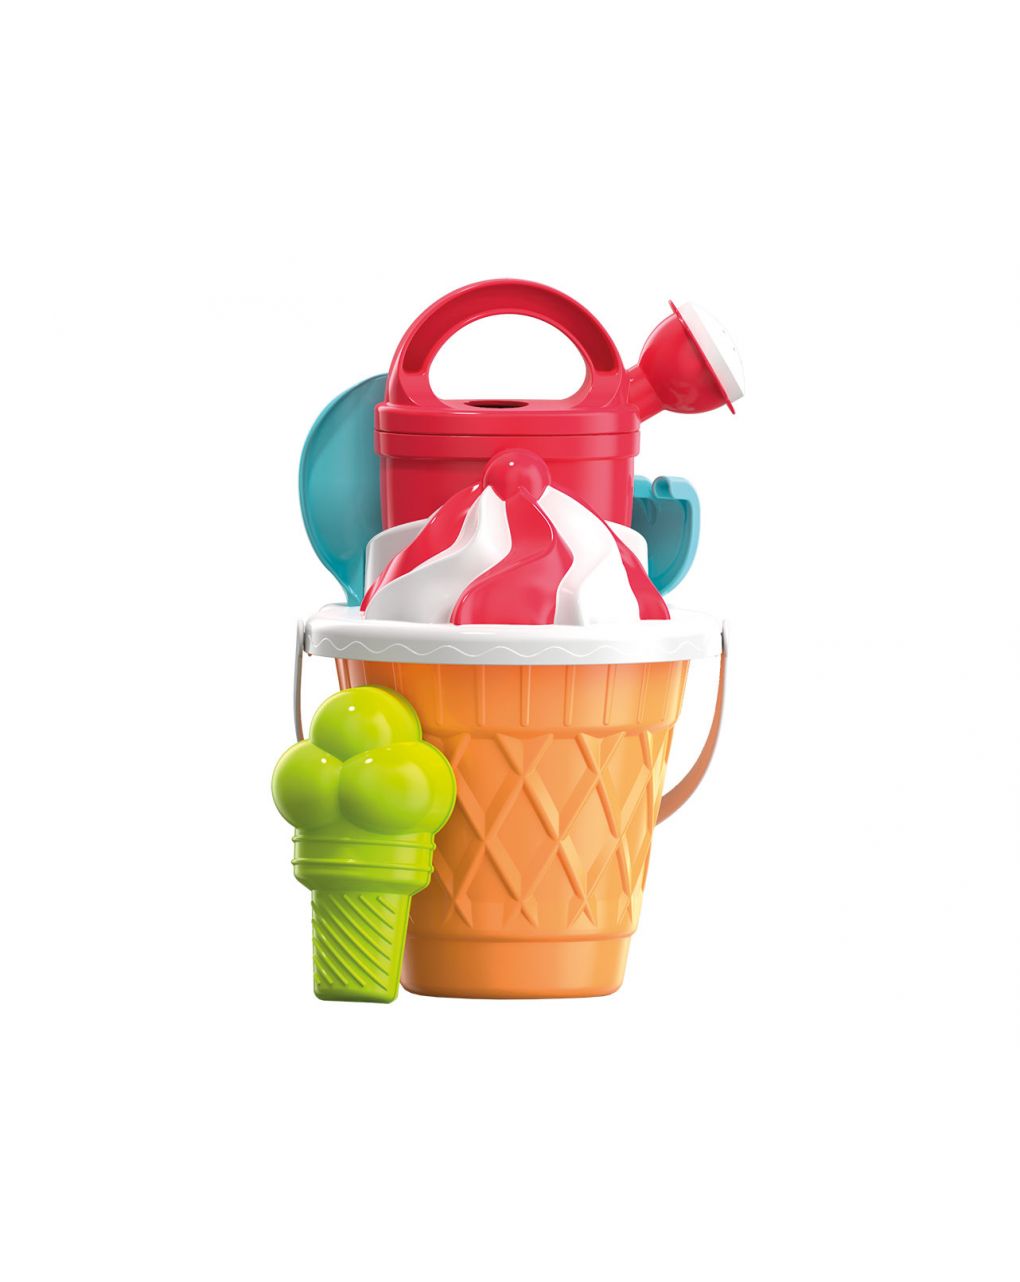 Ice cream sea set - androni giocattoli - And, Androni Giocattoli